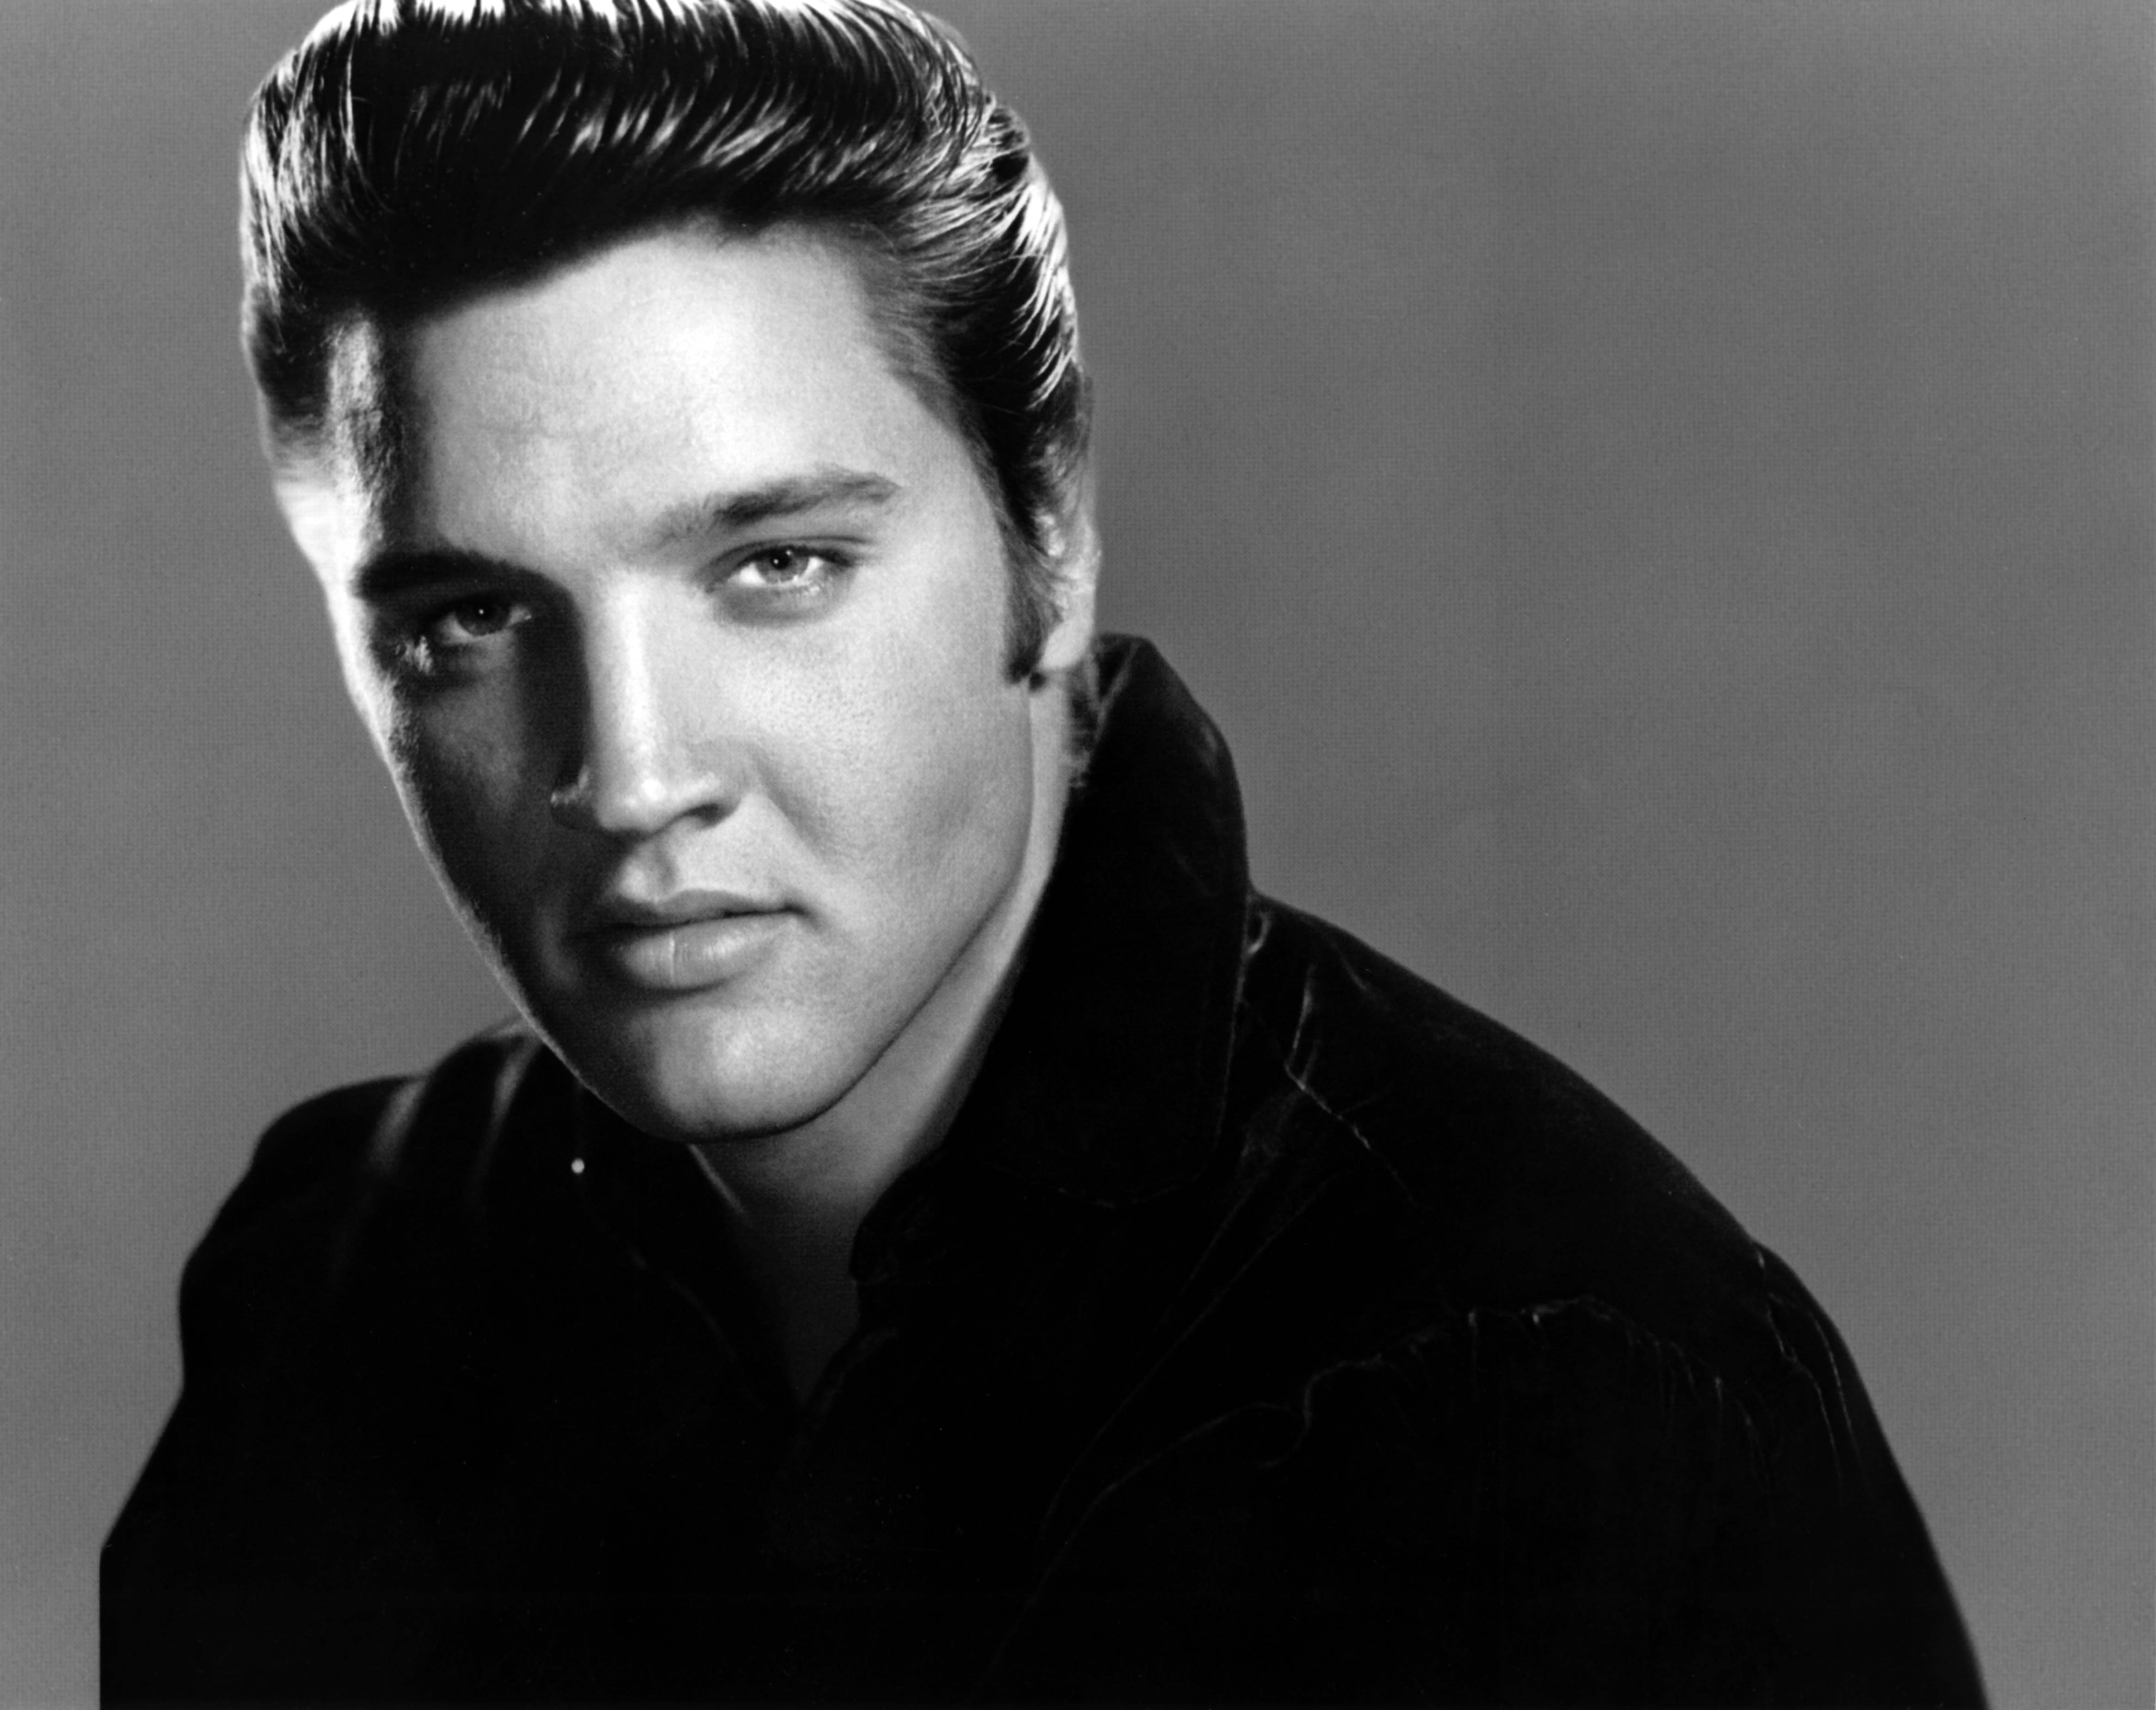 Studio photo of Elvis Presley